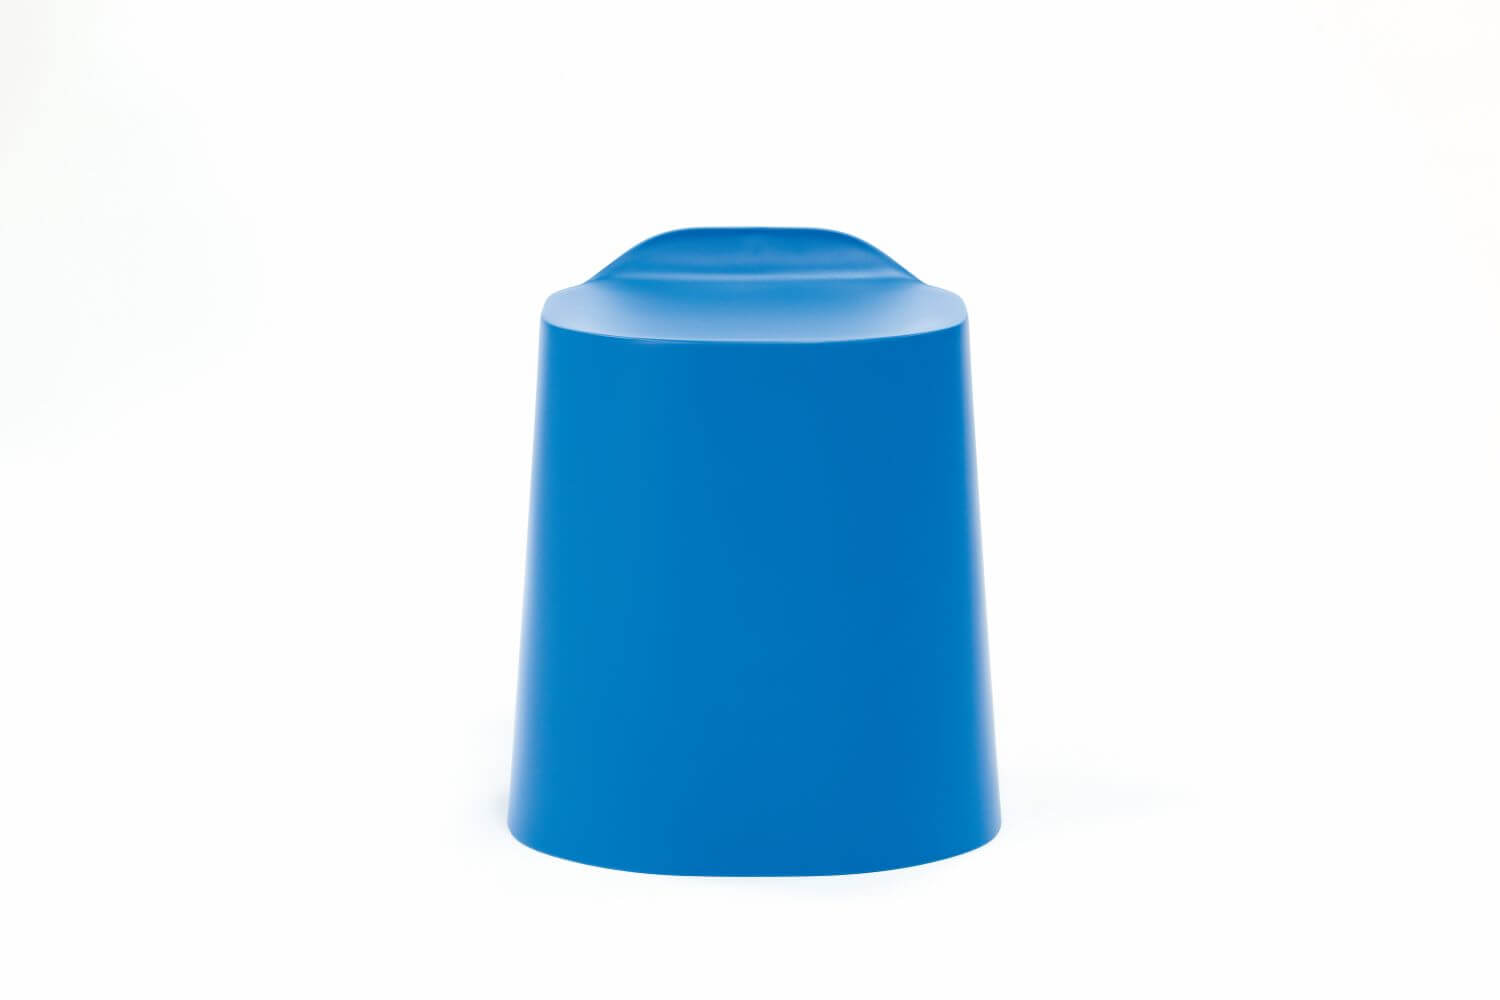 Peekaboo stool in blue, front view